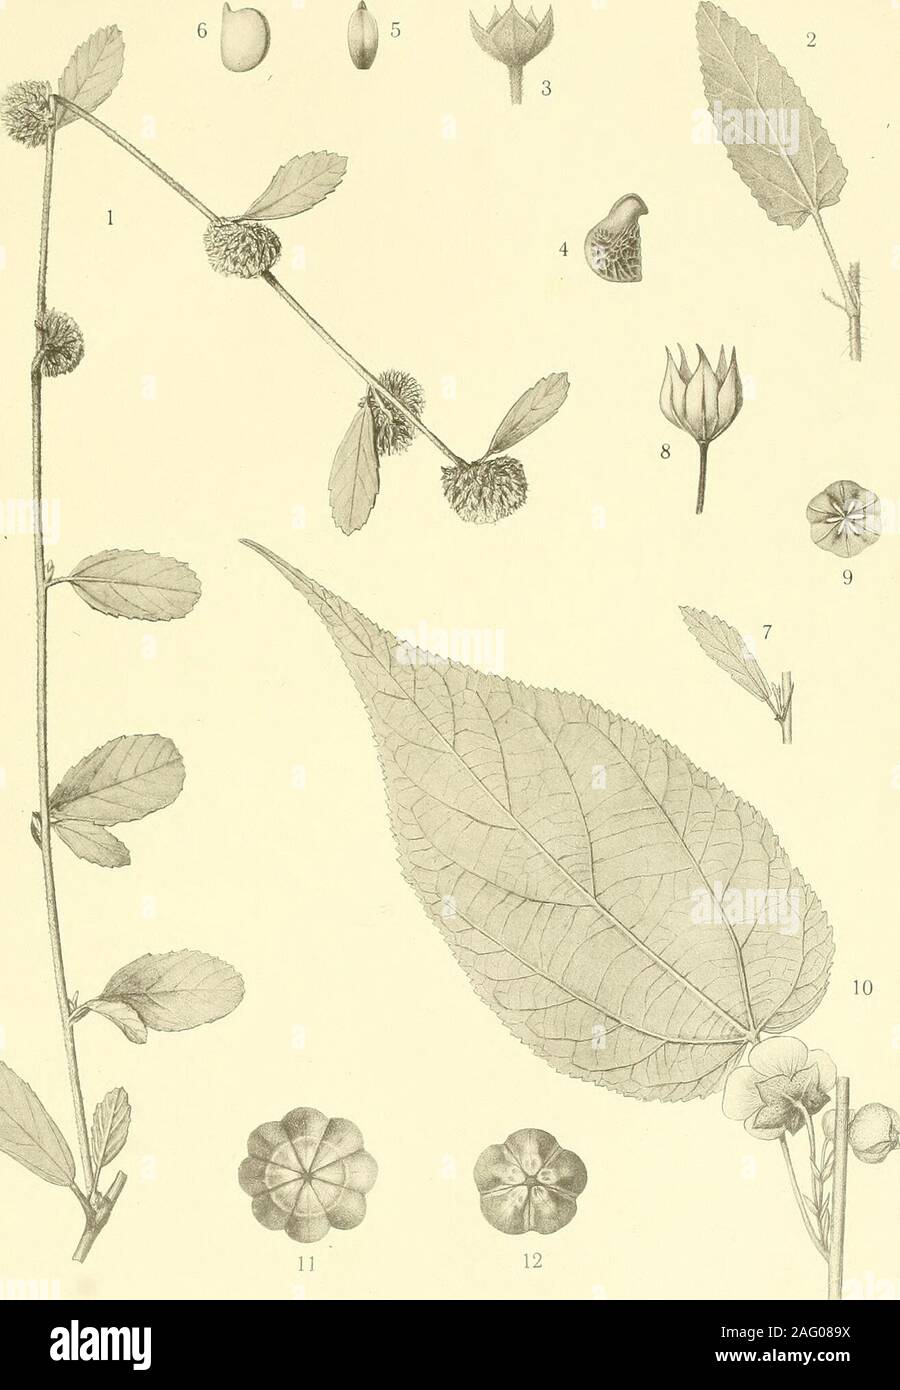 . Svenska vetenskapsakademien handlingar. Th. Ekblom del. Ljustr. Justus Cederquist, Sthlm. 1—2. Helicteres acuminata R. E. Fr. — 3. Helicteres Lhotzkyana (Schott et Endl.) K. Sch.4. Melochia kerriffifolia Tr. et Pl. — 5—6. Luhea microcarpa R. E. Fr. K. SVENSKA VETENSKAPSAKADEMIENS HANDLINGAR. B. 42 N:o 12. Tafel 3.. Th. Ekbiom del. Ljustr. Justus Cederquist, Sthlm. 1. Waltheria vernonioides R. E. Fr. — 2—6. Sida Regnellii R. E. Fr. — 7—9. Sida tuberculata R. E. Fr.10. Abutilon Itatiai» R. E. Fr. — 11. Sida macrodon DC. — 12. Sida intermedia St. Hil. K. SVENSKA VETENSKAPSAKADEMIENS HANDLINGAR. Stock Photo